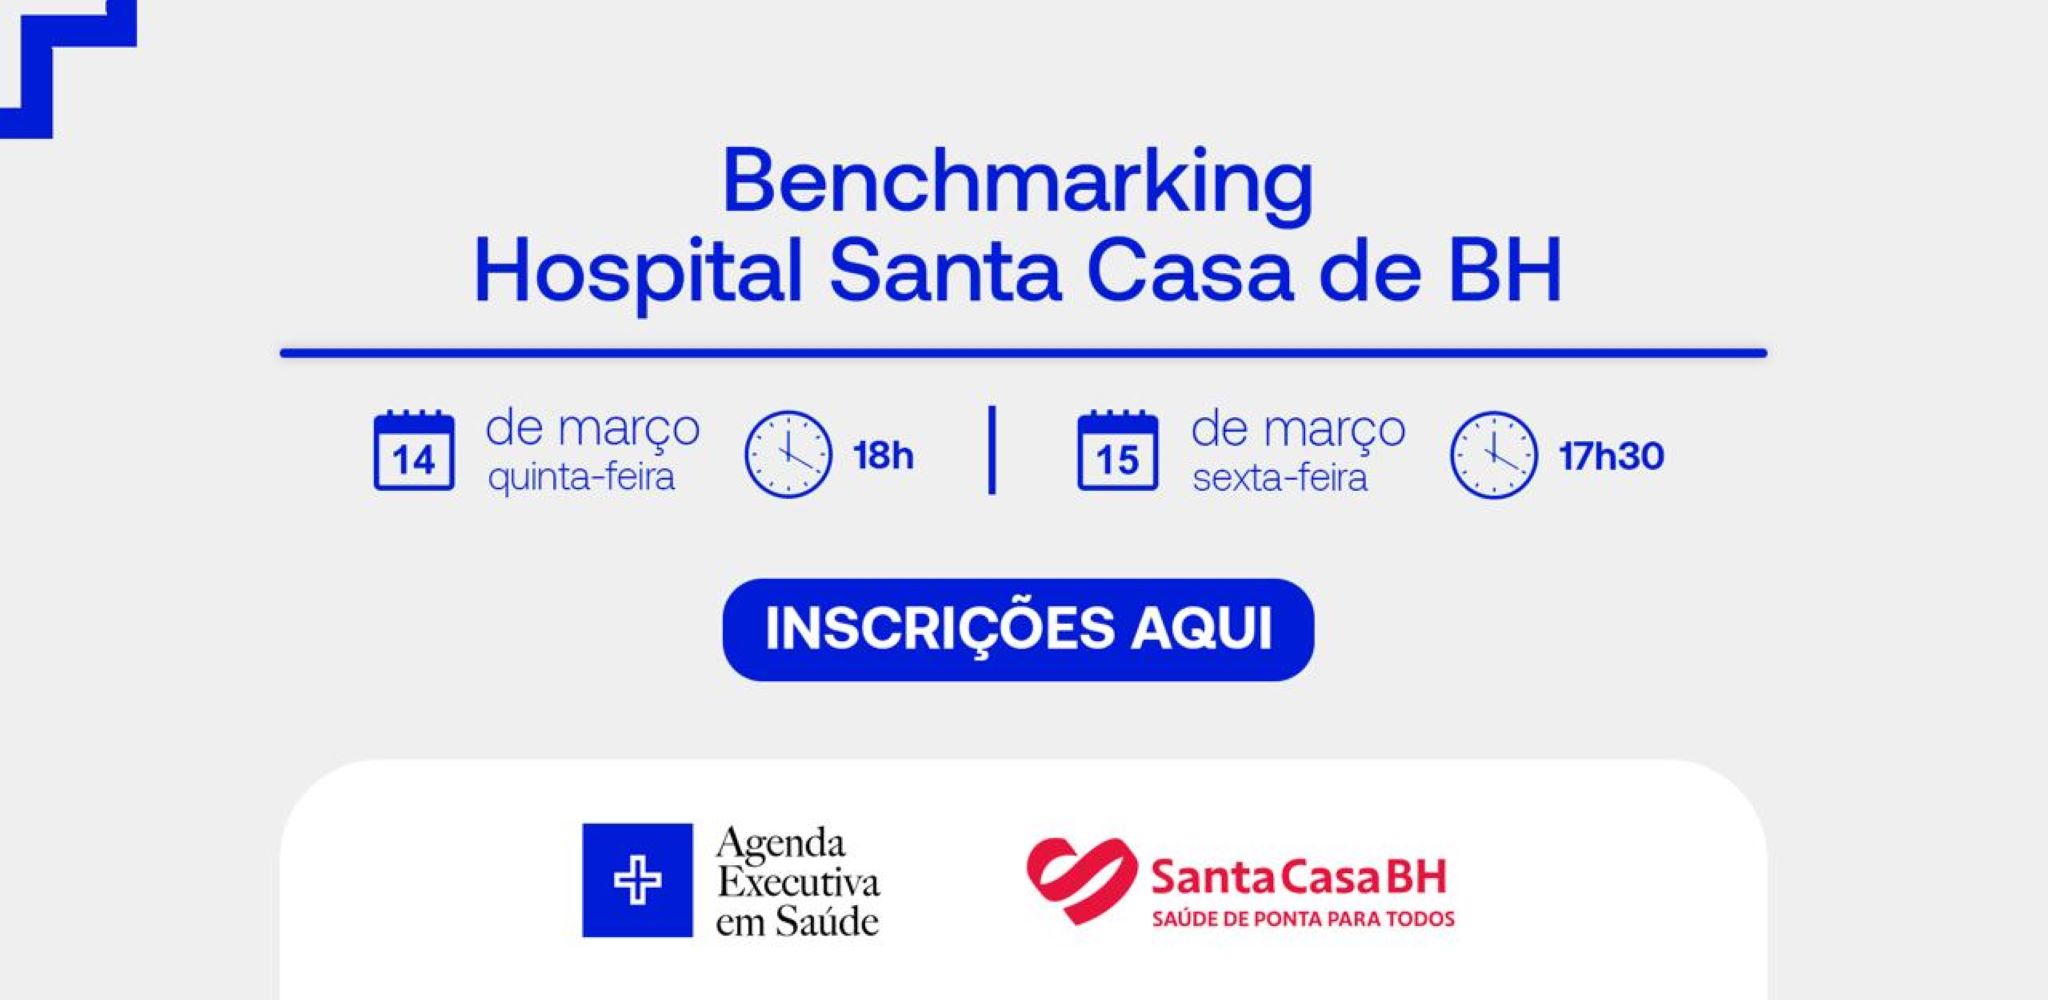 Benchmarking Santa Casa BH